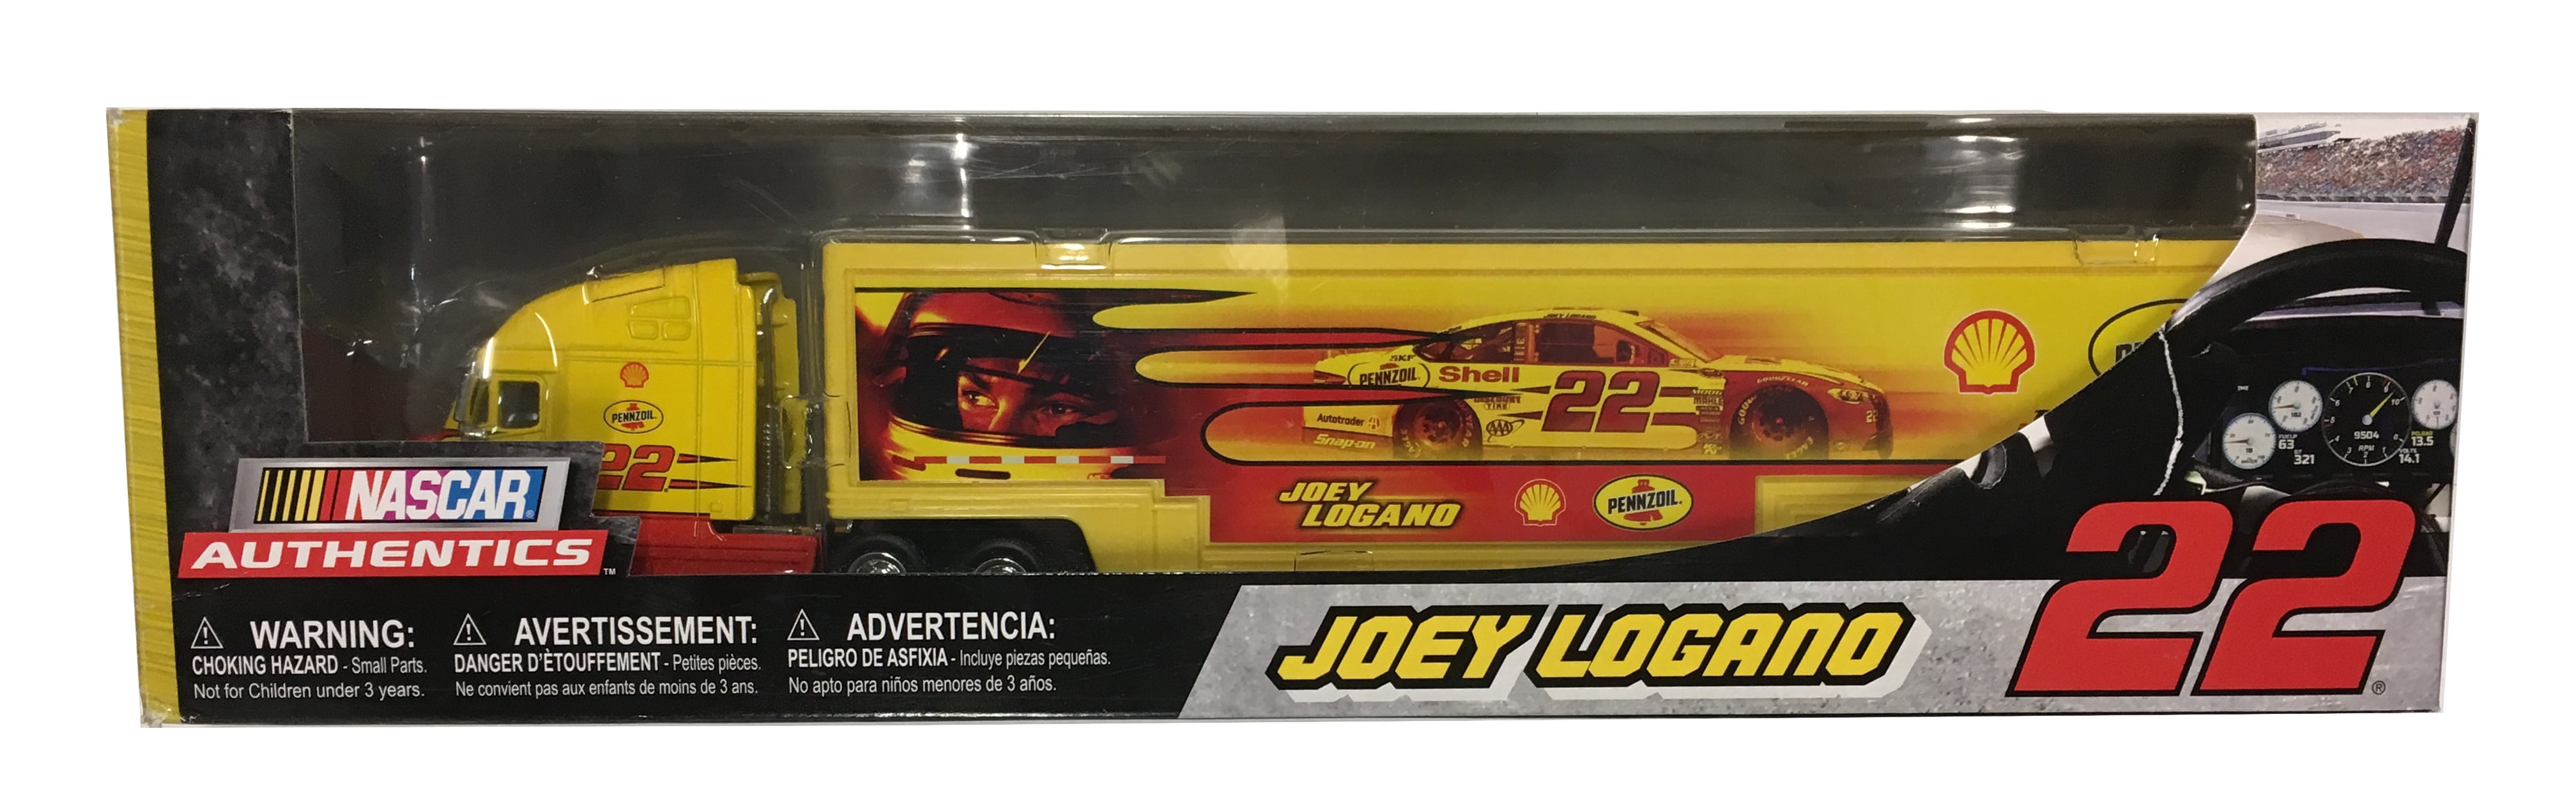 2017 Wave 3 Joey Logano Shell Pennzoil 1/64 NASCAR Authentics Hauler 